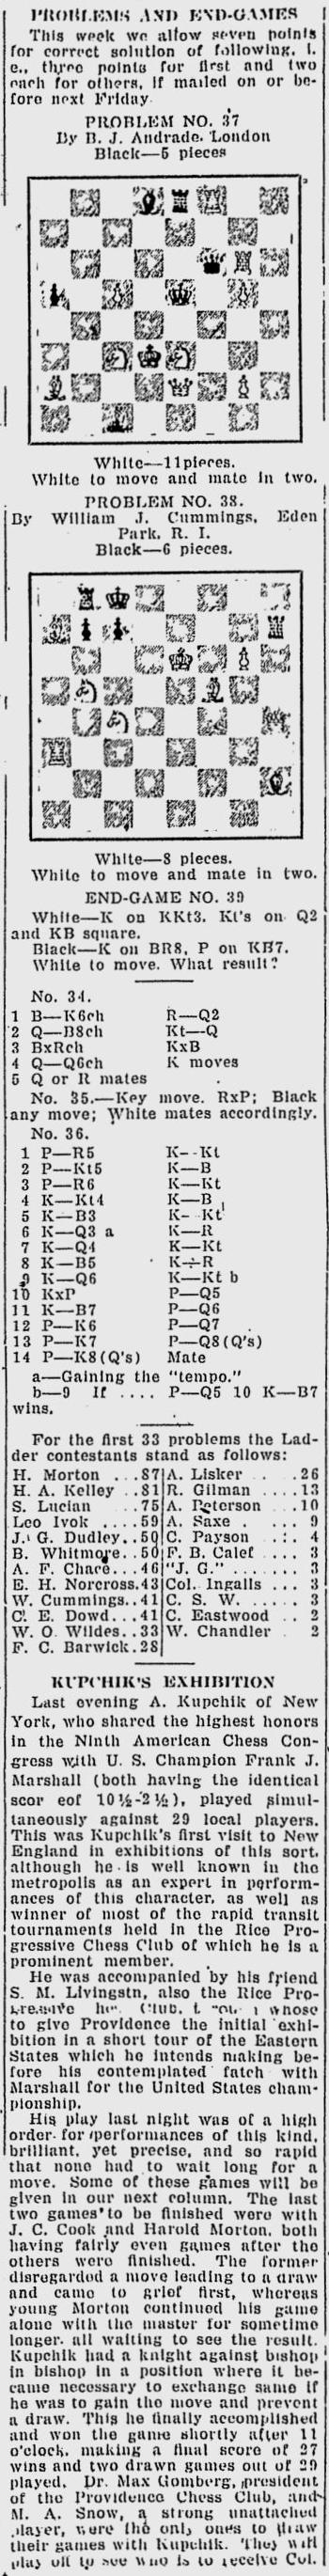 1923.10.27-04 Providence News.jpg